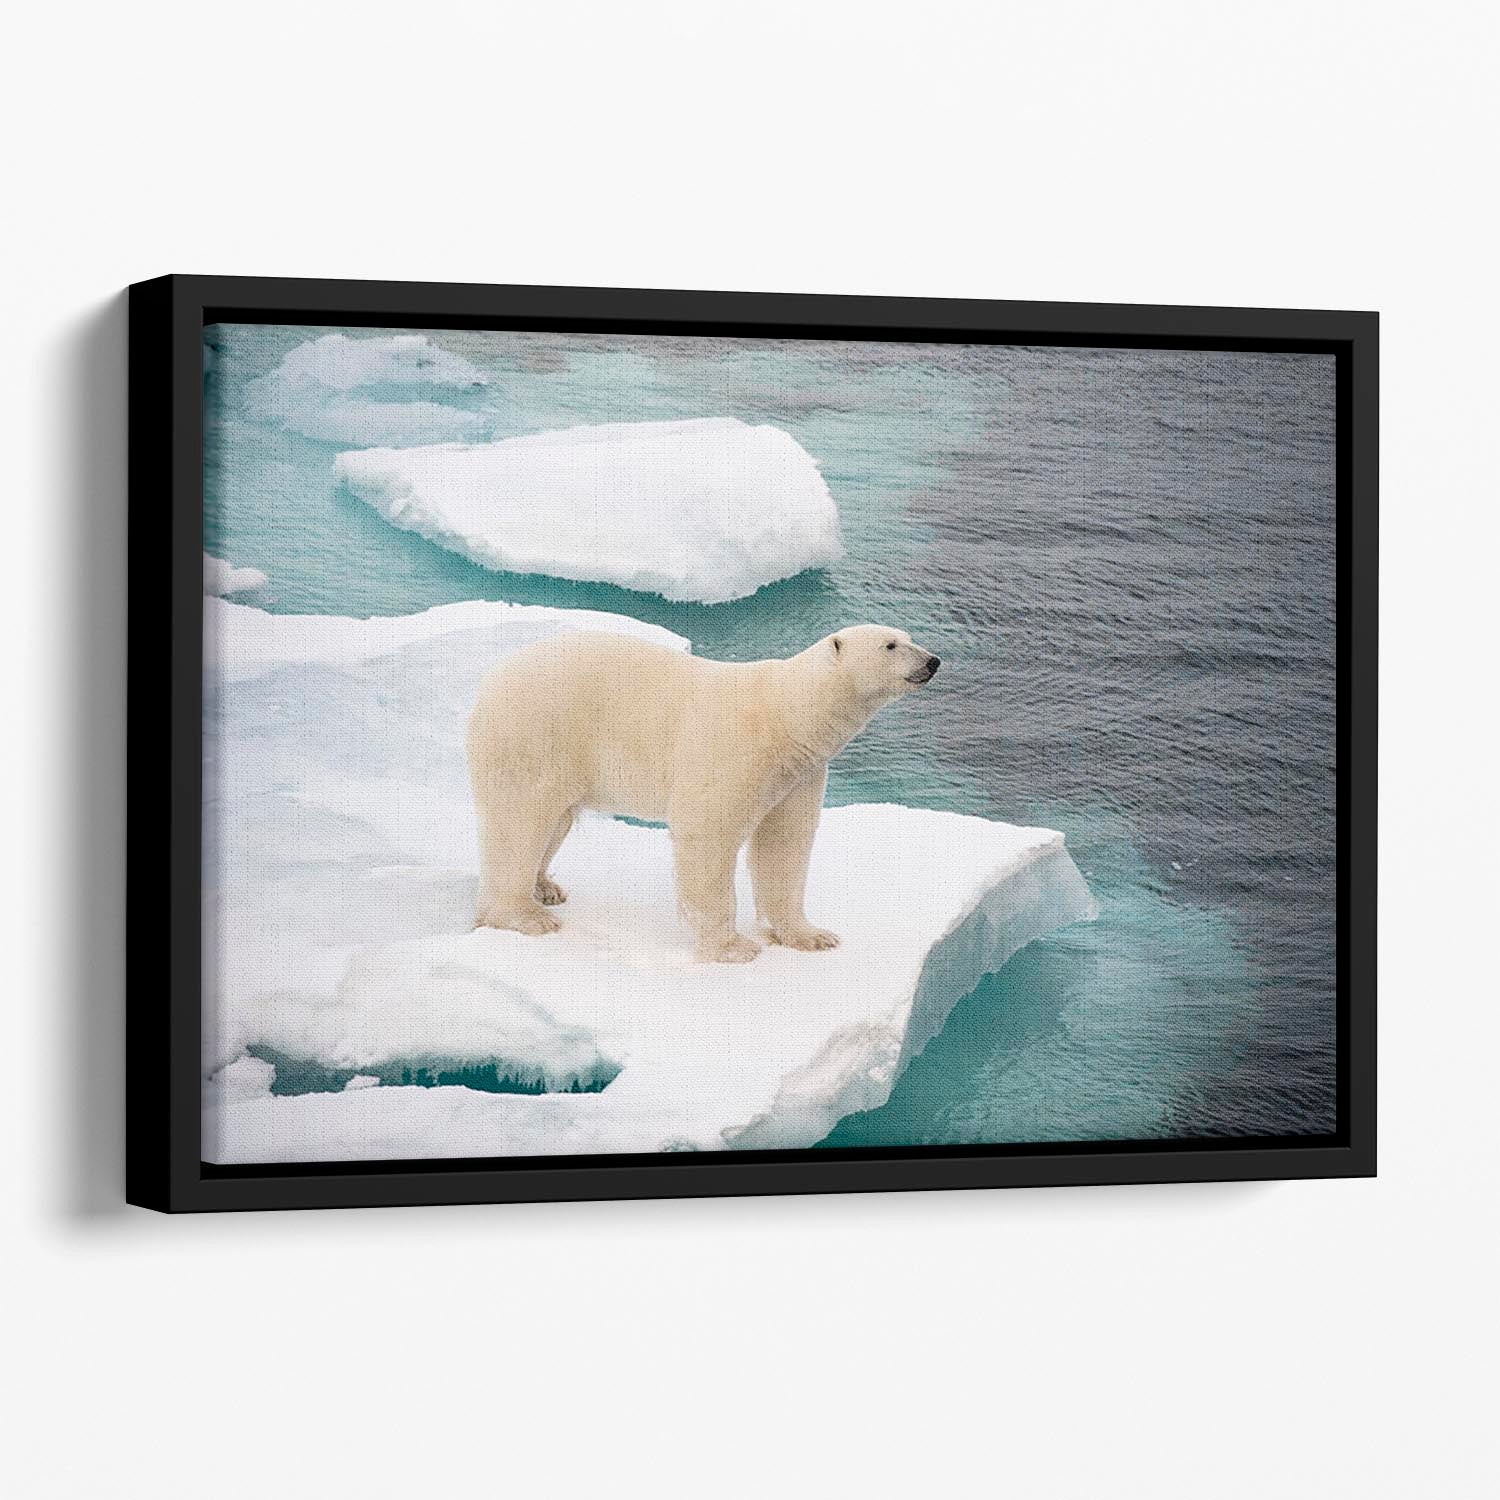 Polar bear walking on sea ice Floating Framed Canvas - Canvas Art Rocks - 1